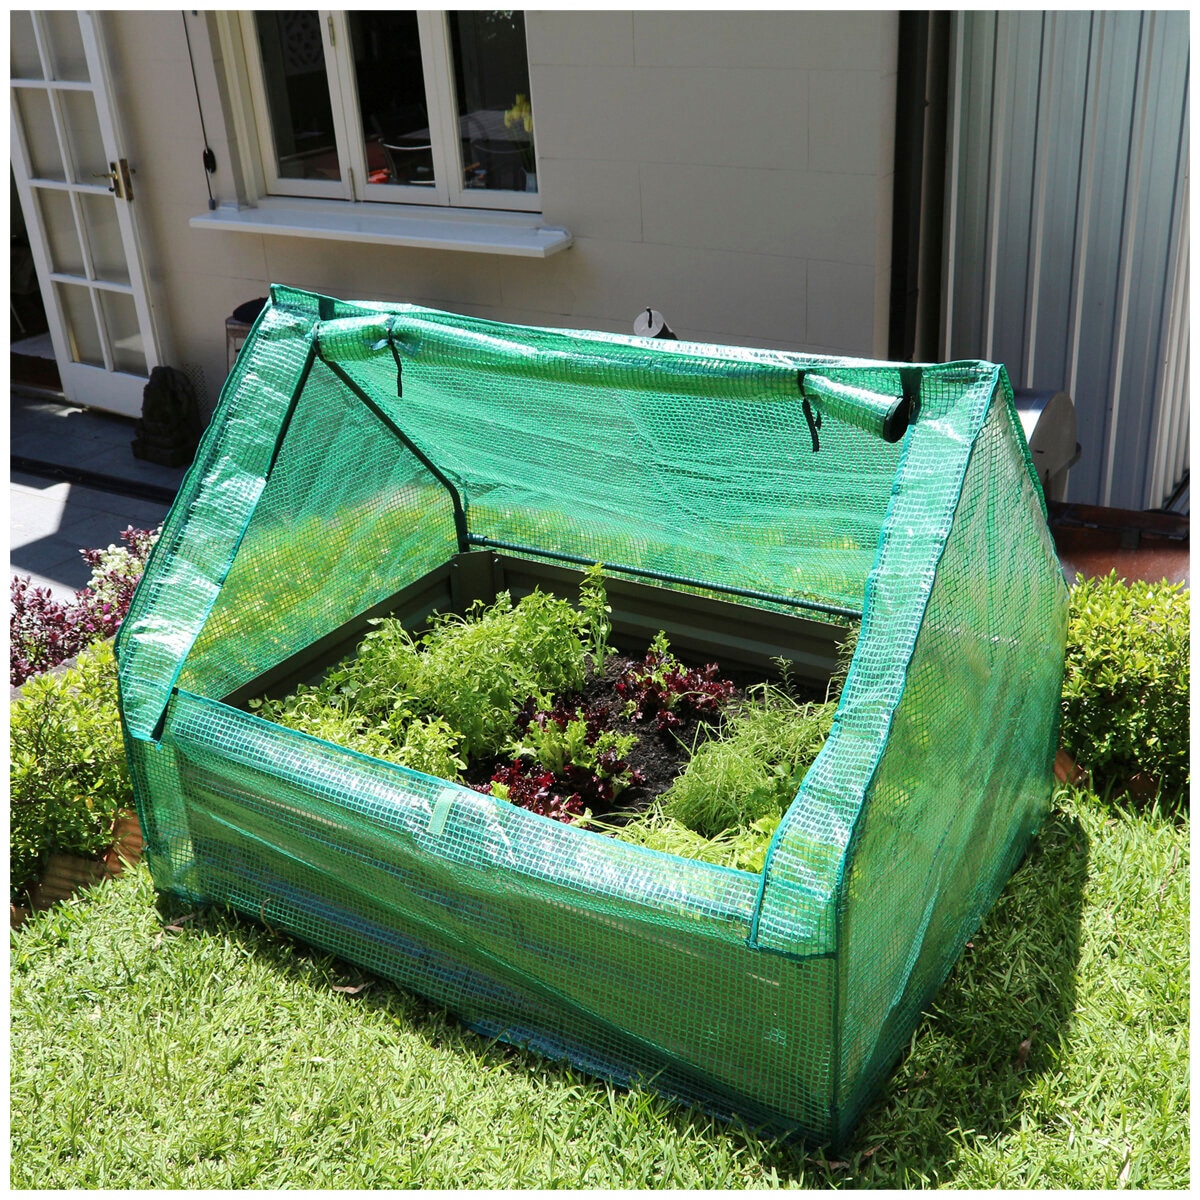 Greenlife Raised Garden Bed